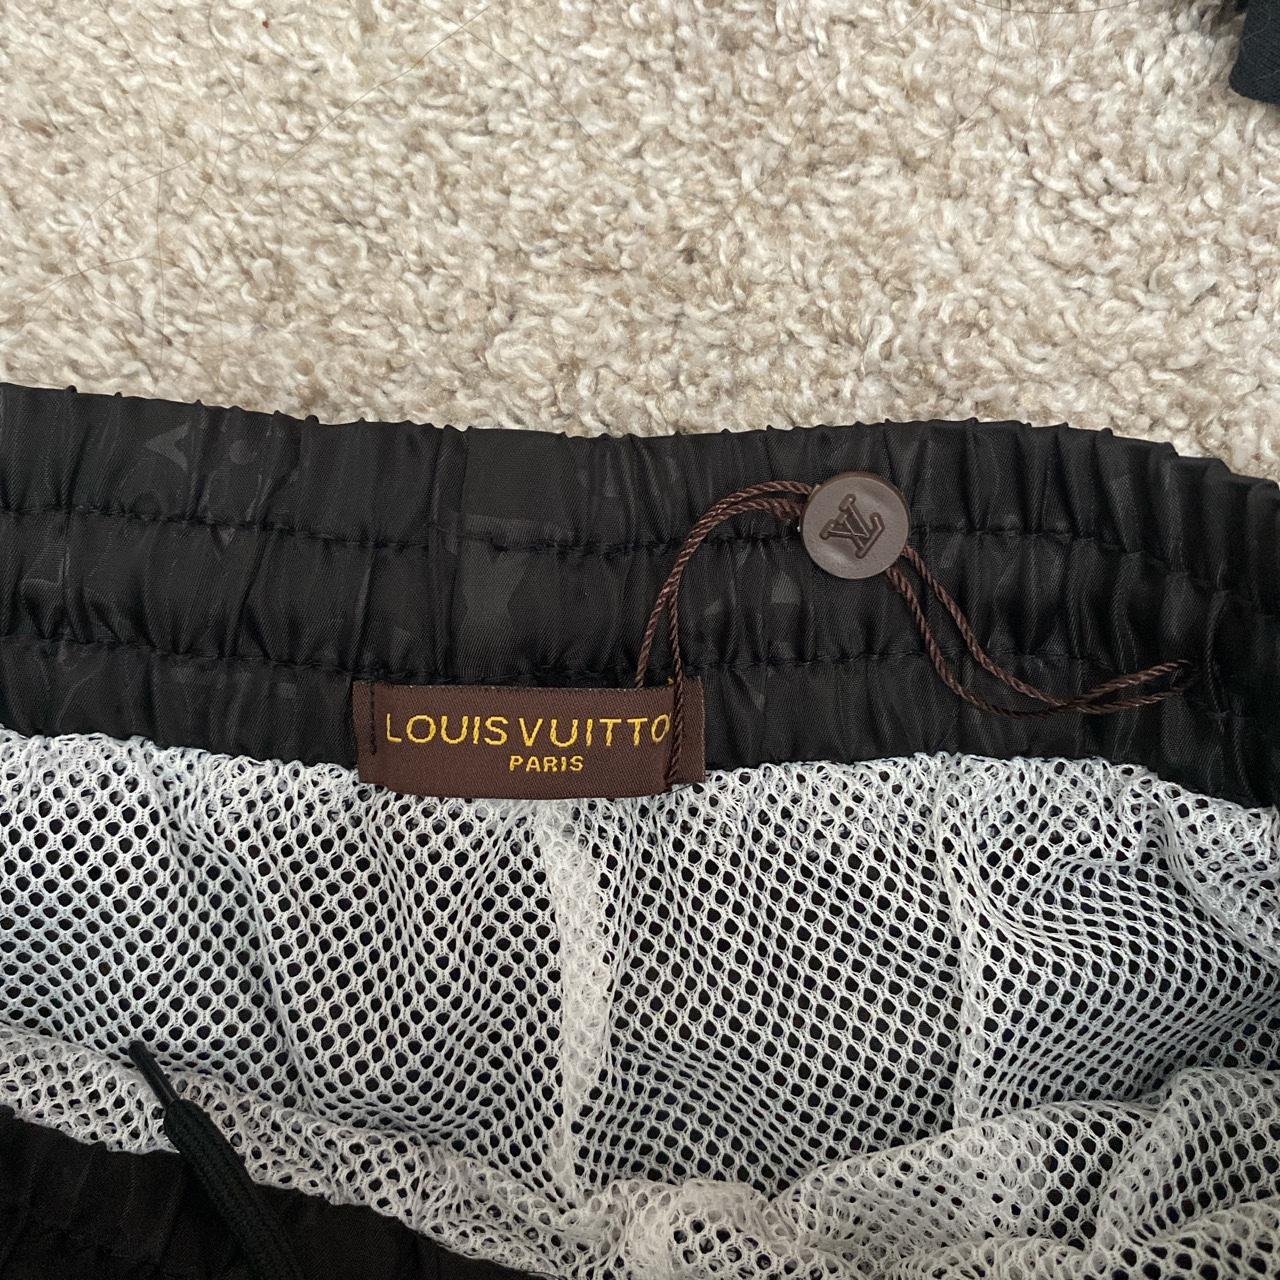 New Medium Louis Vuitton swim shorts black - Depop